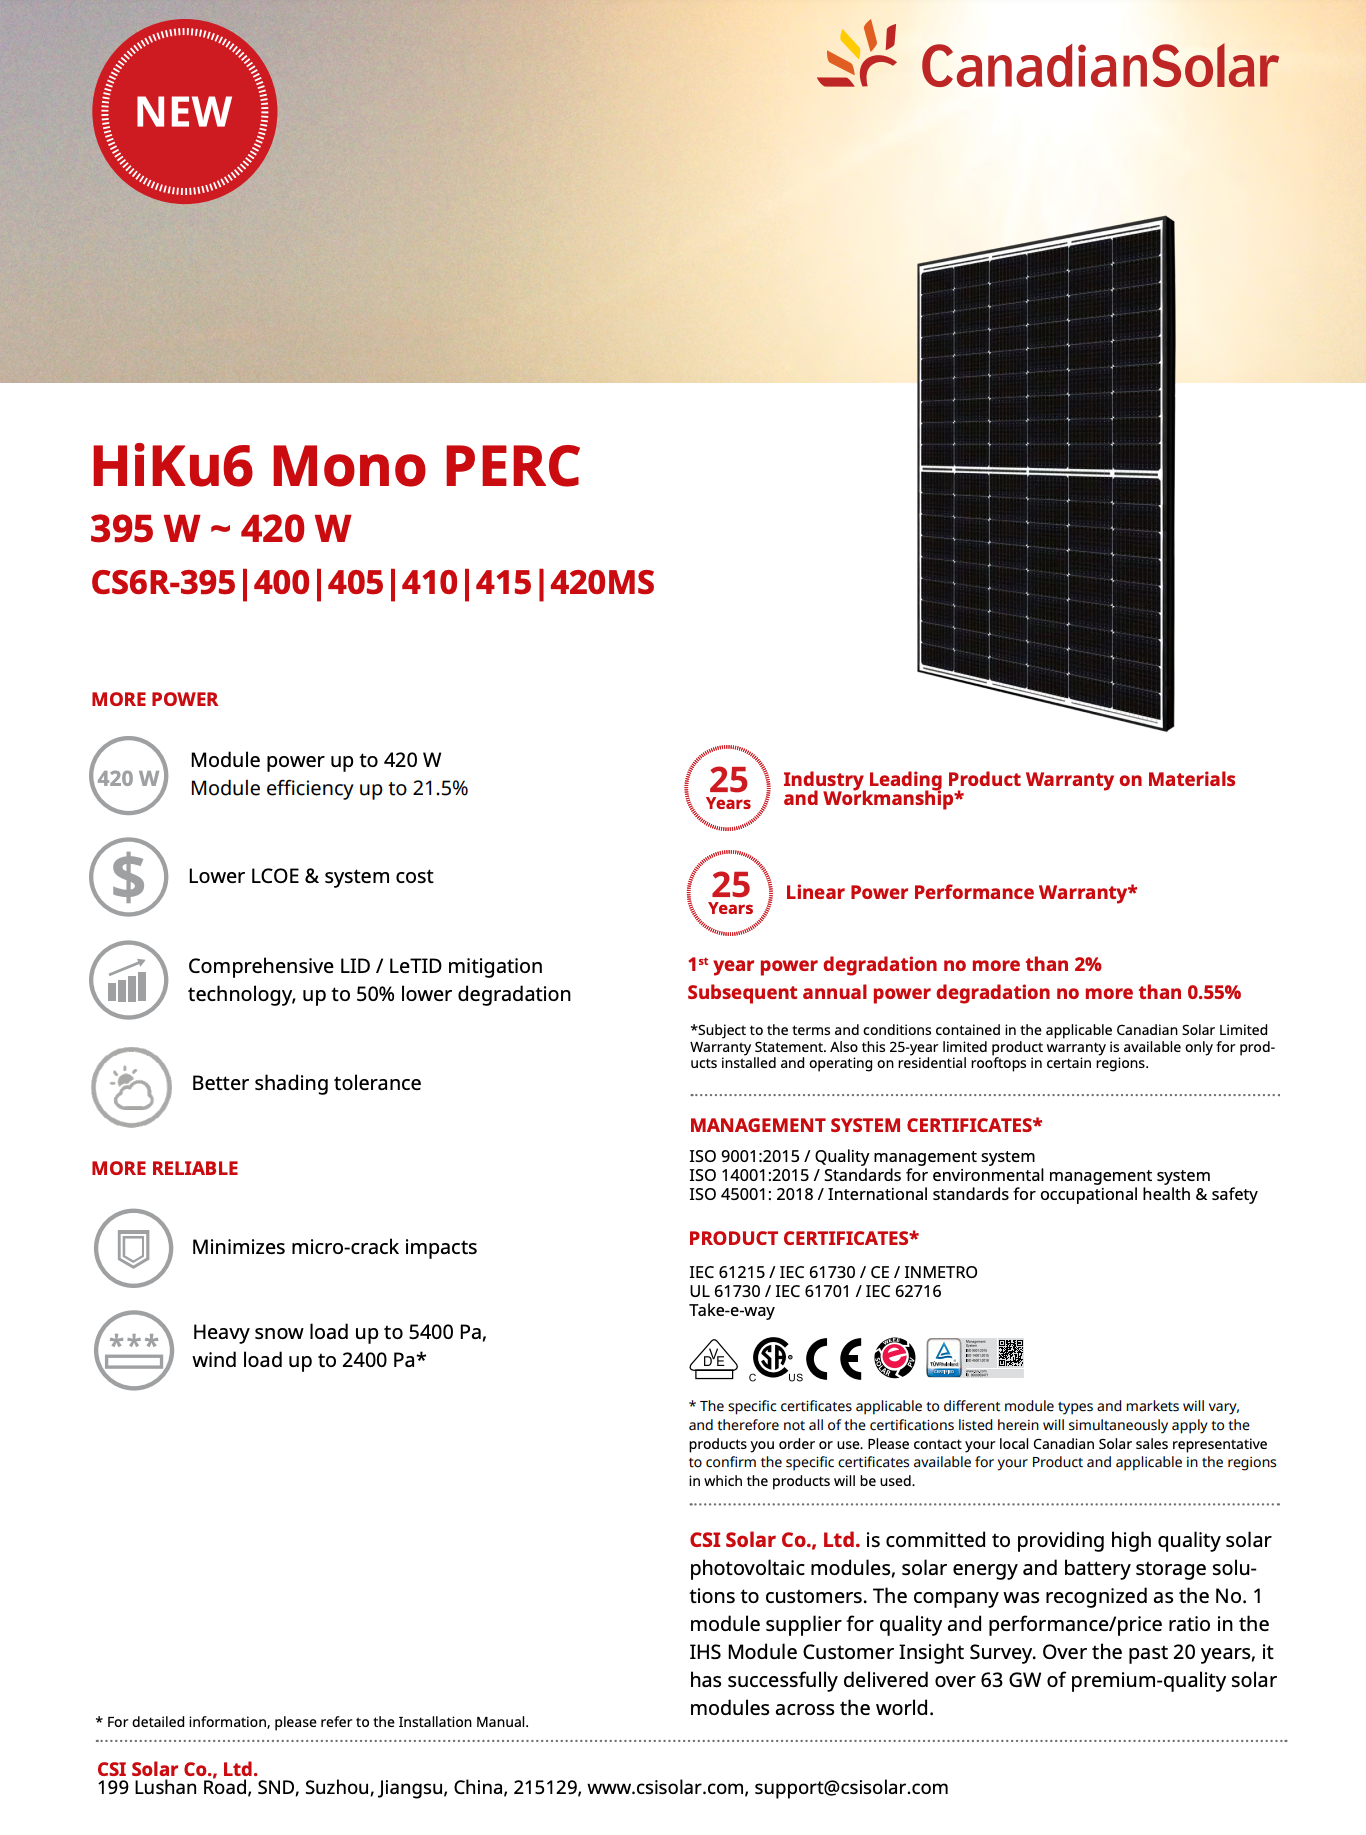 Low-Budget-Modul: Canadian Solar HiKu6 Mono PERC 405 Wpeak Halfcut Black Frame, schwarzer Rahmen, Solarmodul